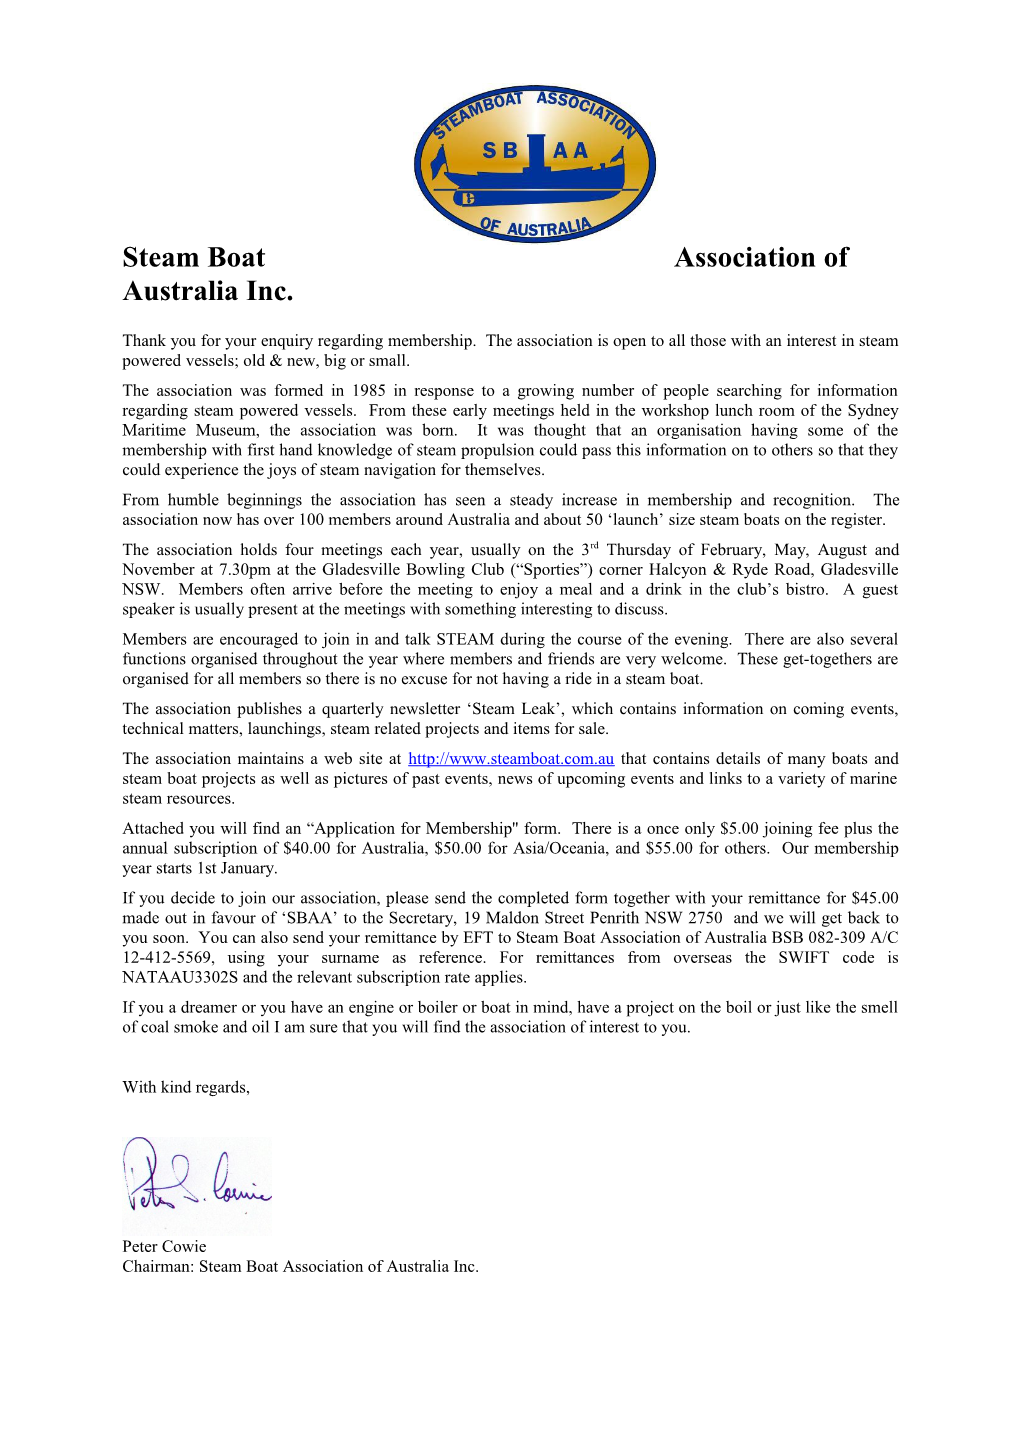 Steam Boat Association of Australia Inc